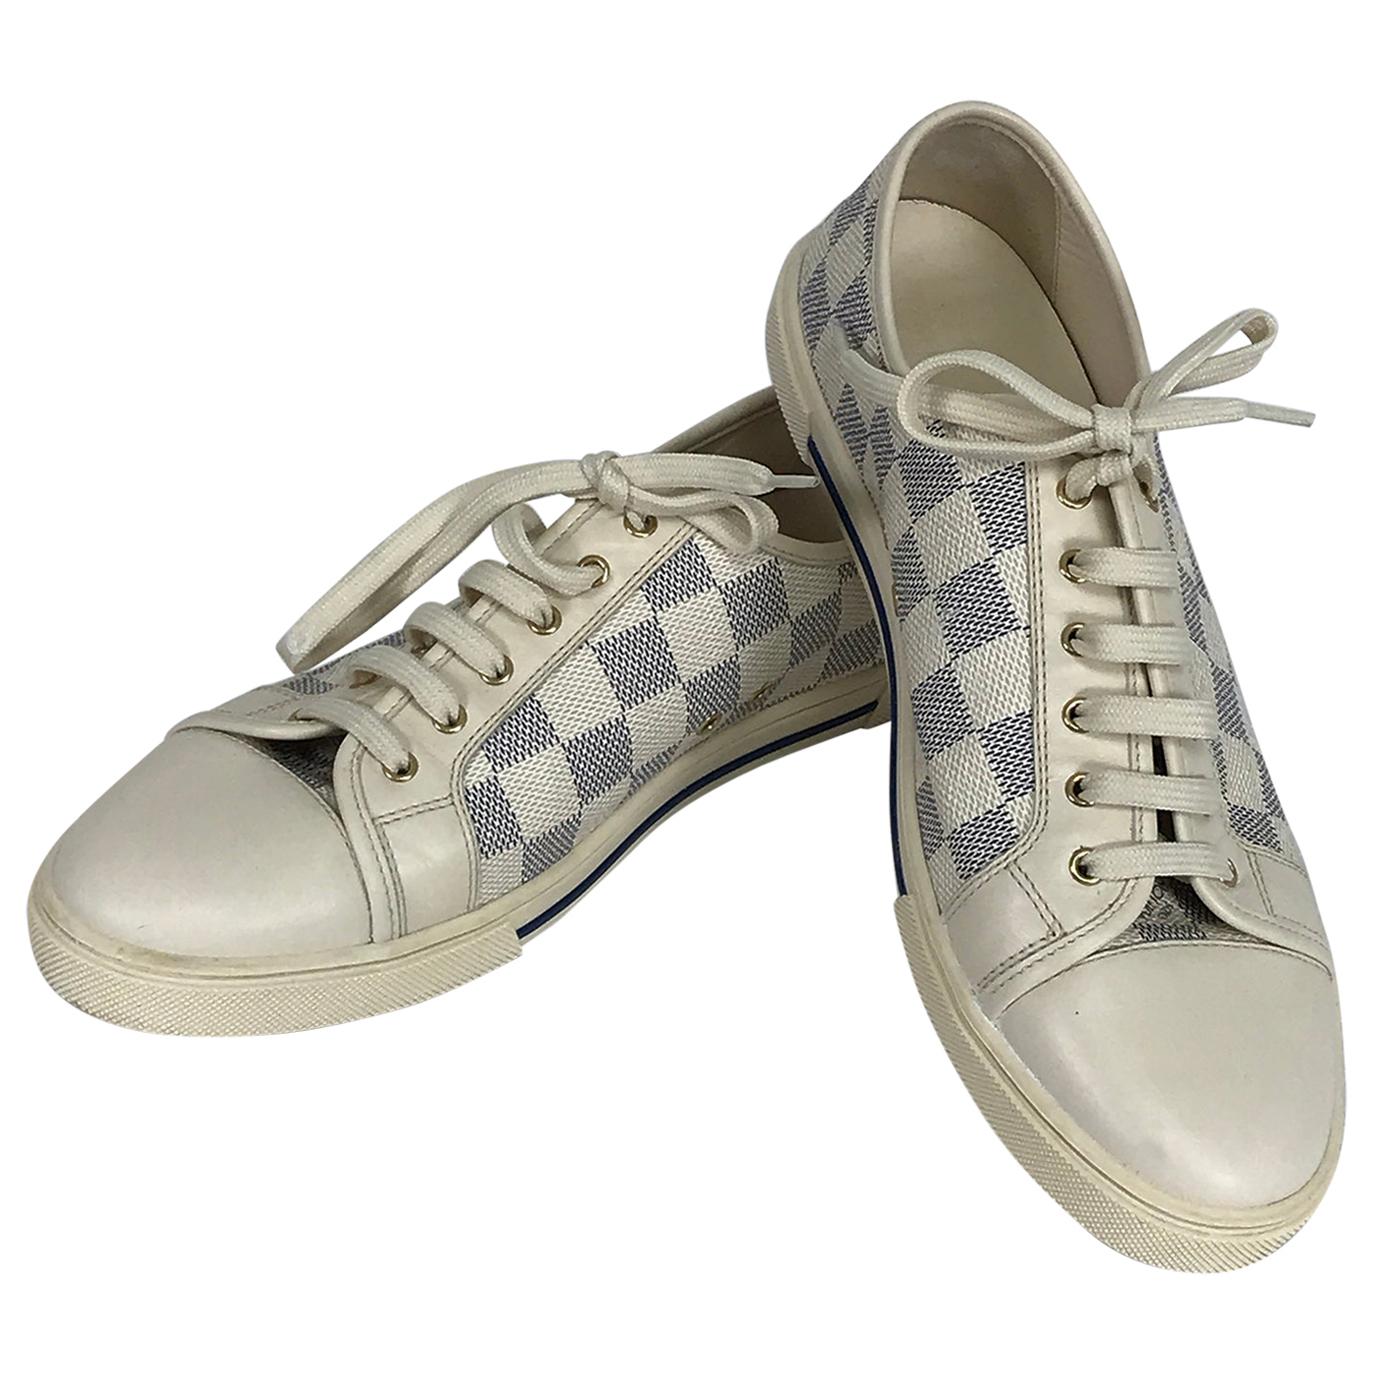 Louis Vuitton Punchy Sneakers Women's Shoes 38 8  Louis vuitton shoes  sneakers, Womens sneakers, Louis vuitton shoes